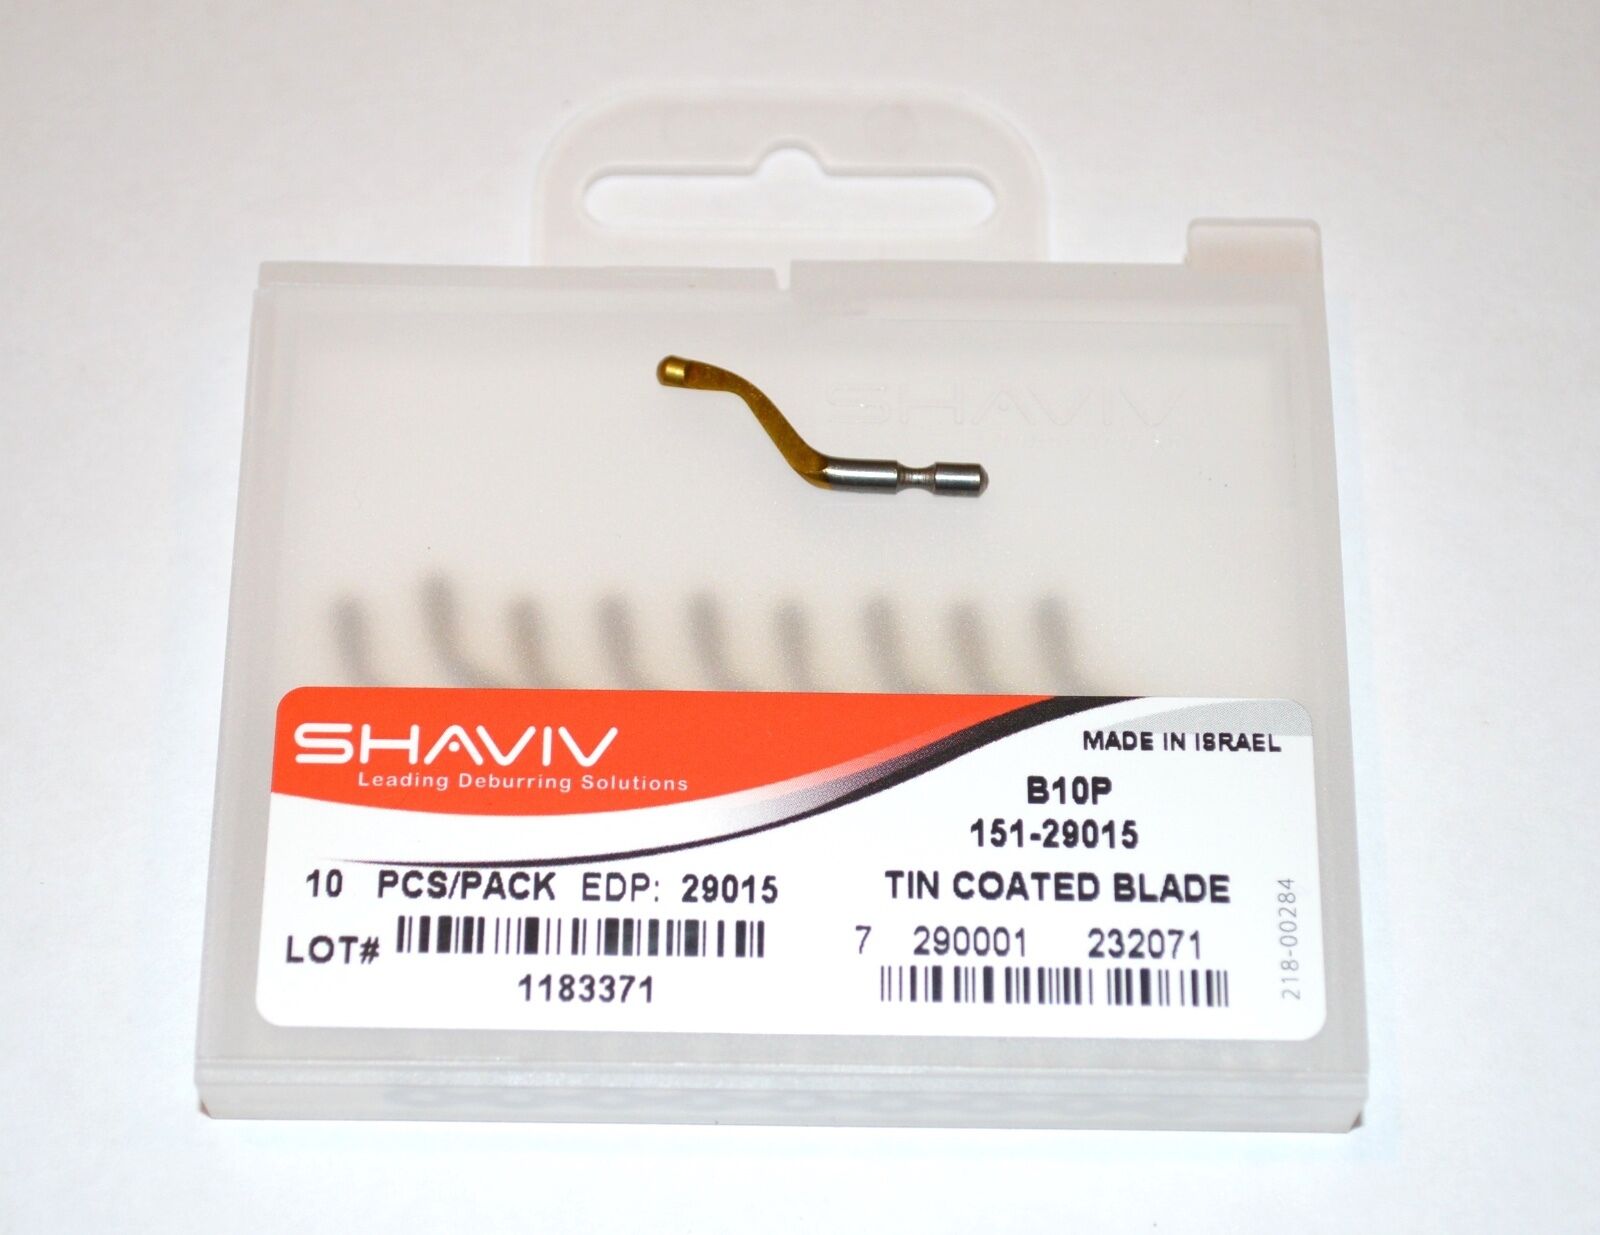 Shaviv B10P Coated Cutter Deburring Blade Pkg of 10  #29015  See Promotion